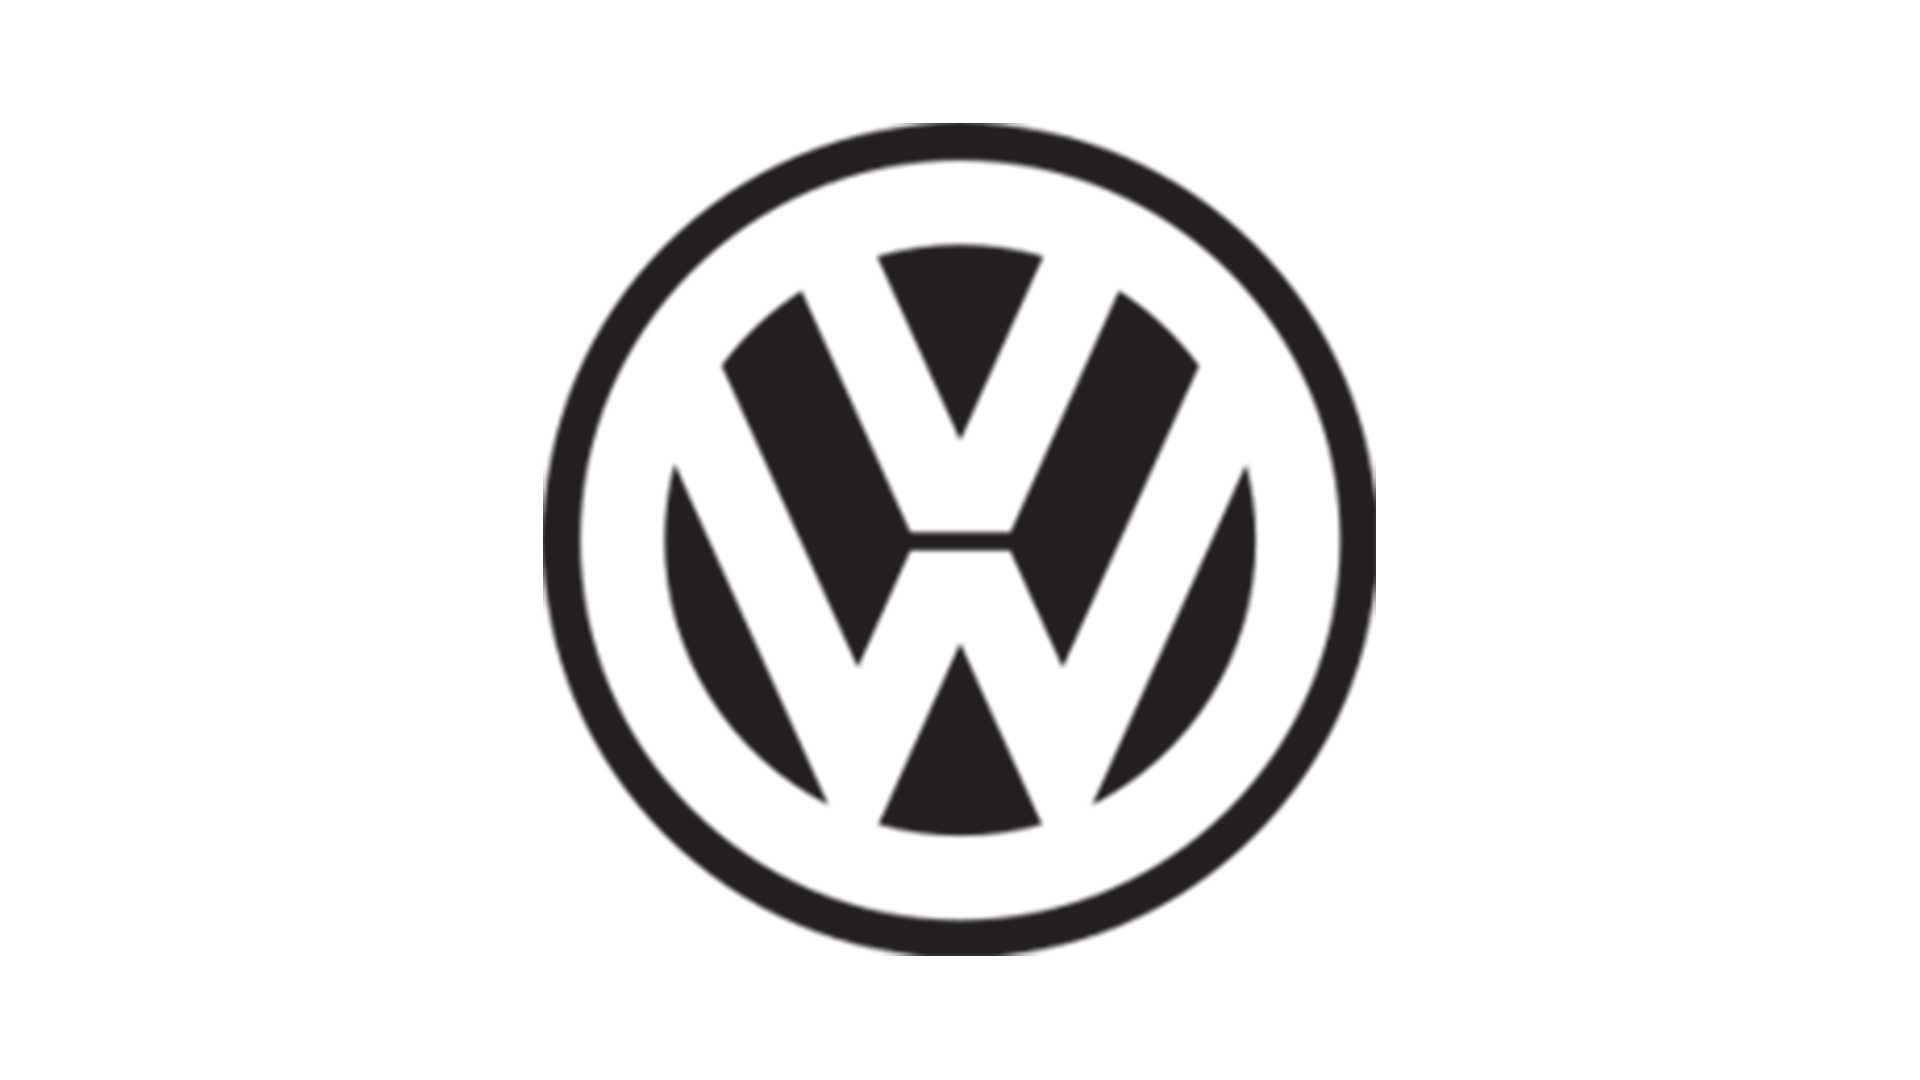 大众汽车(volkswagen),成立于1937年.